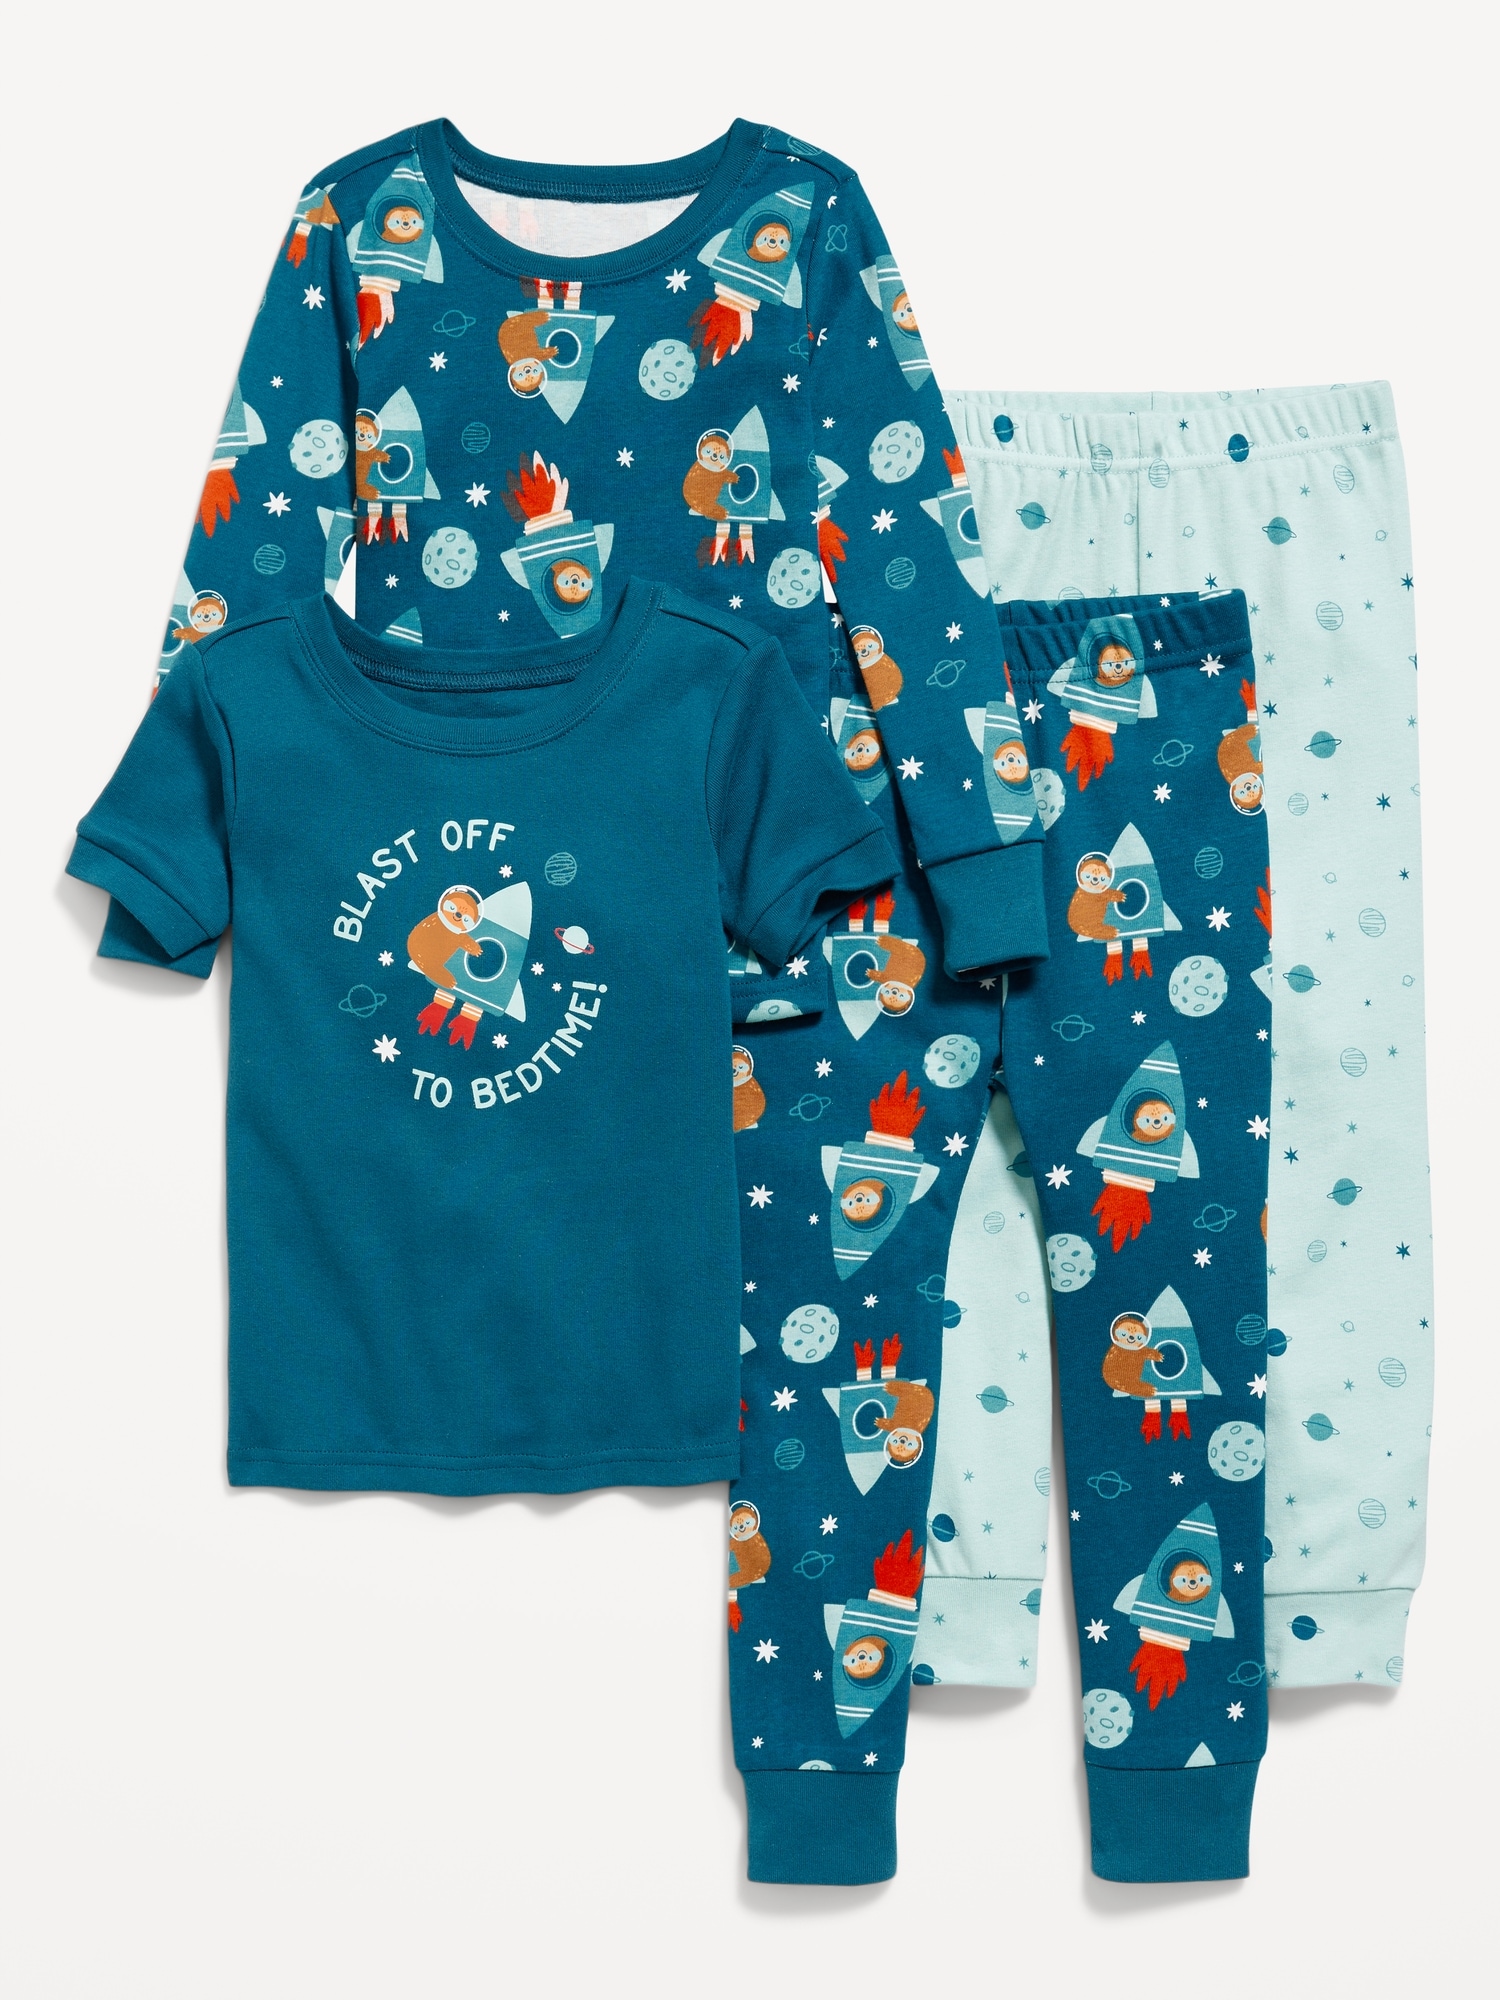  Aablexema Baby Short Summer Pajamas - Toddler Cool